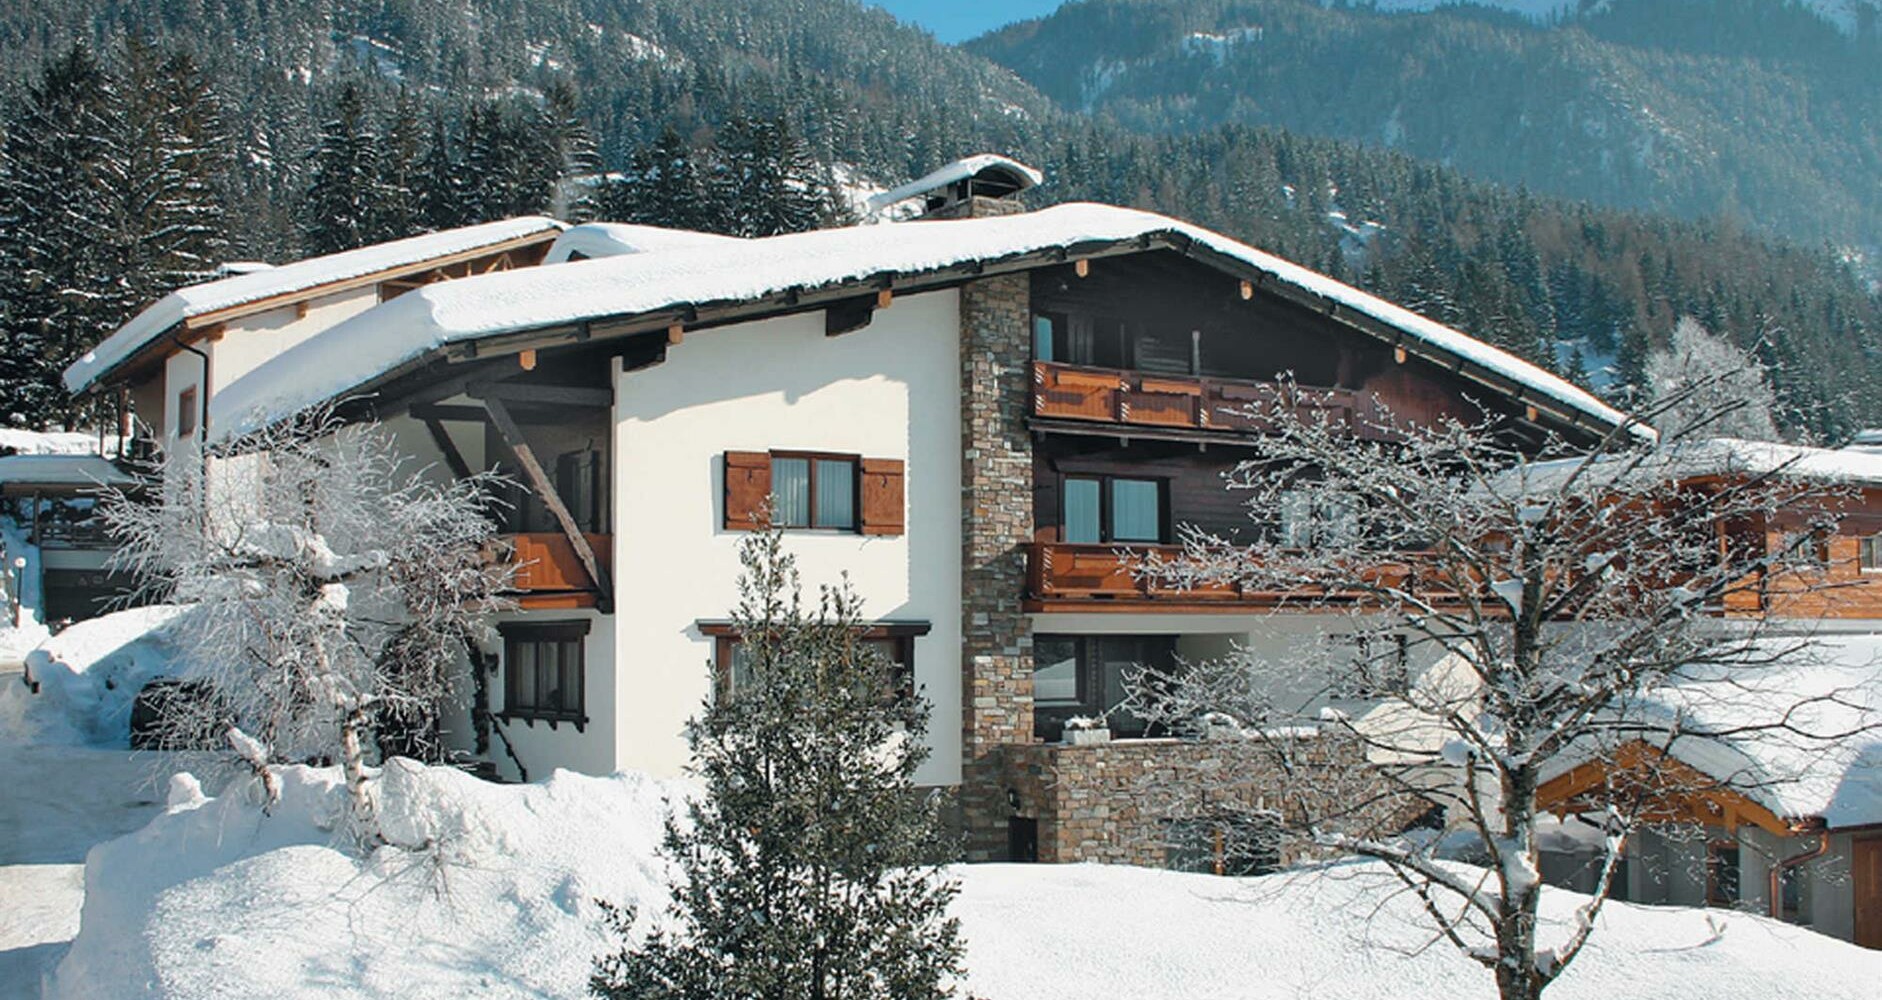 Haus-Alpina-Winter.jpg